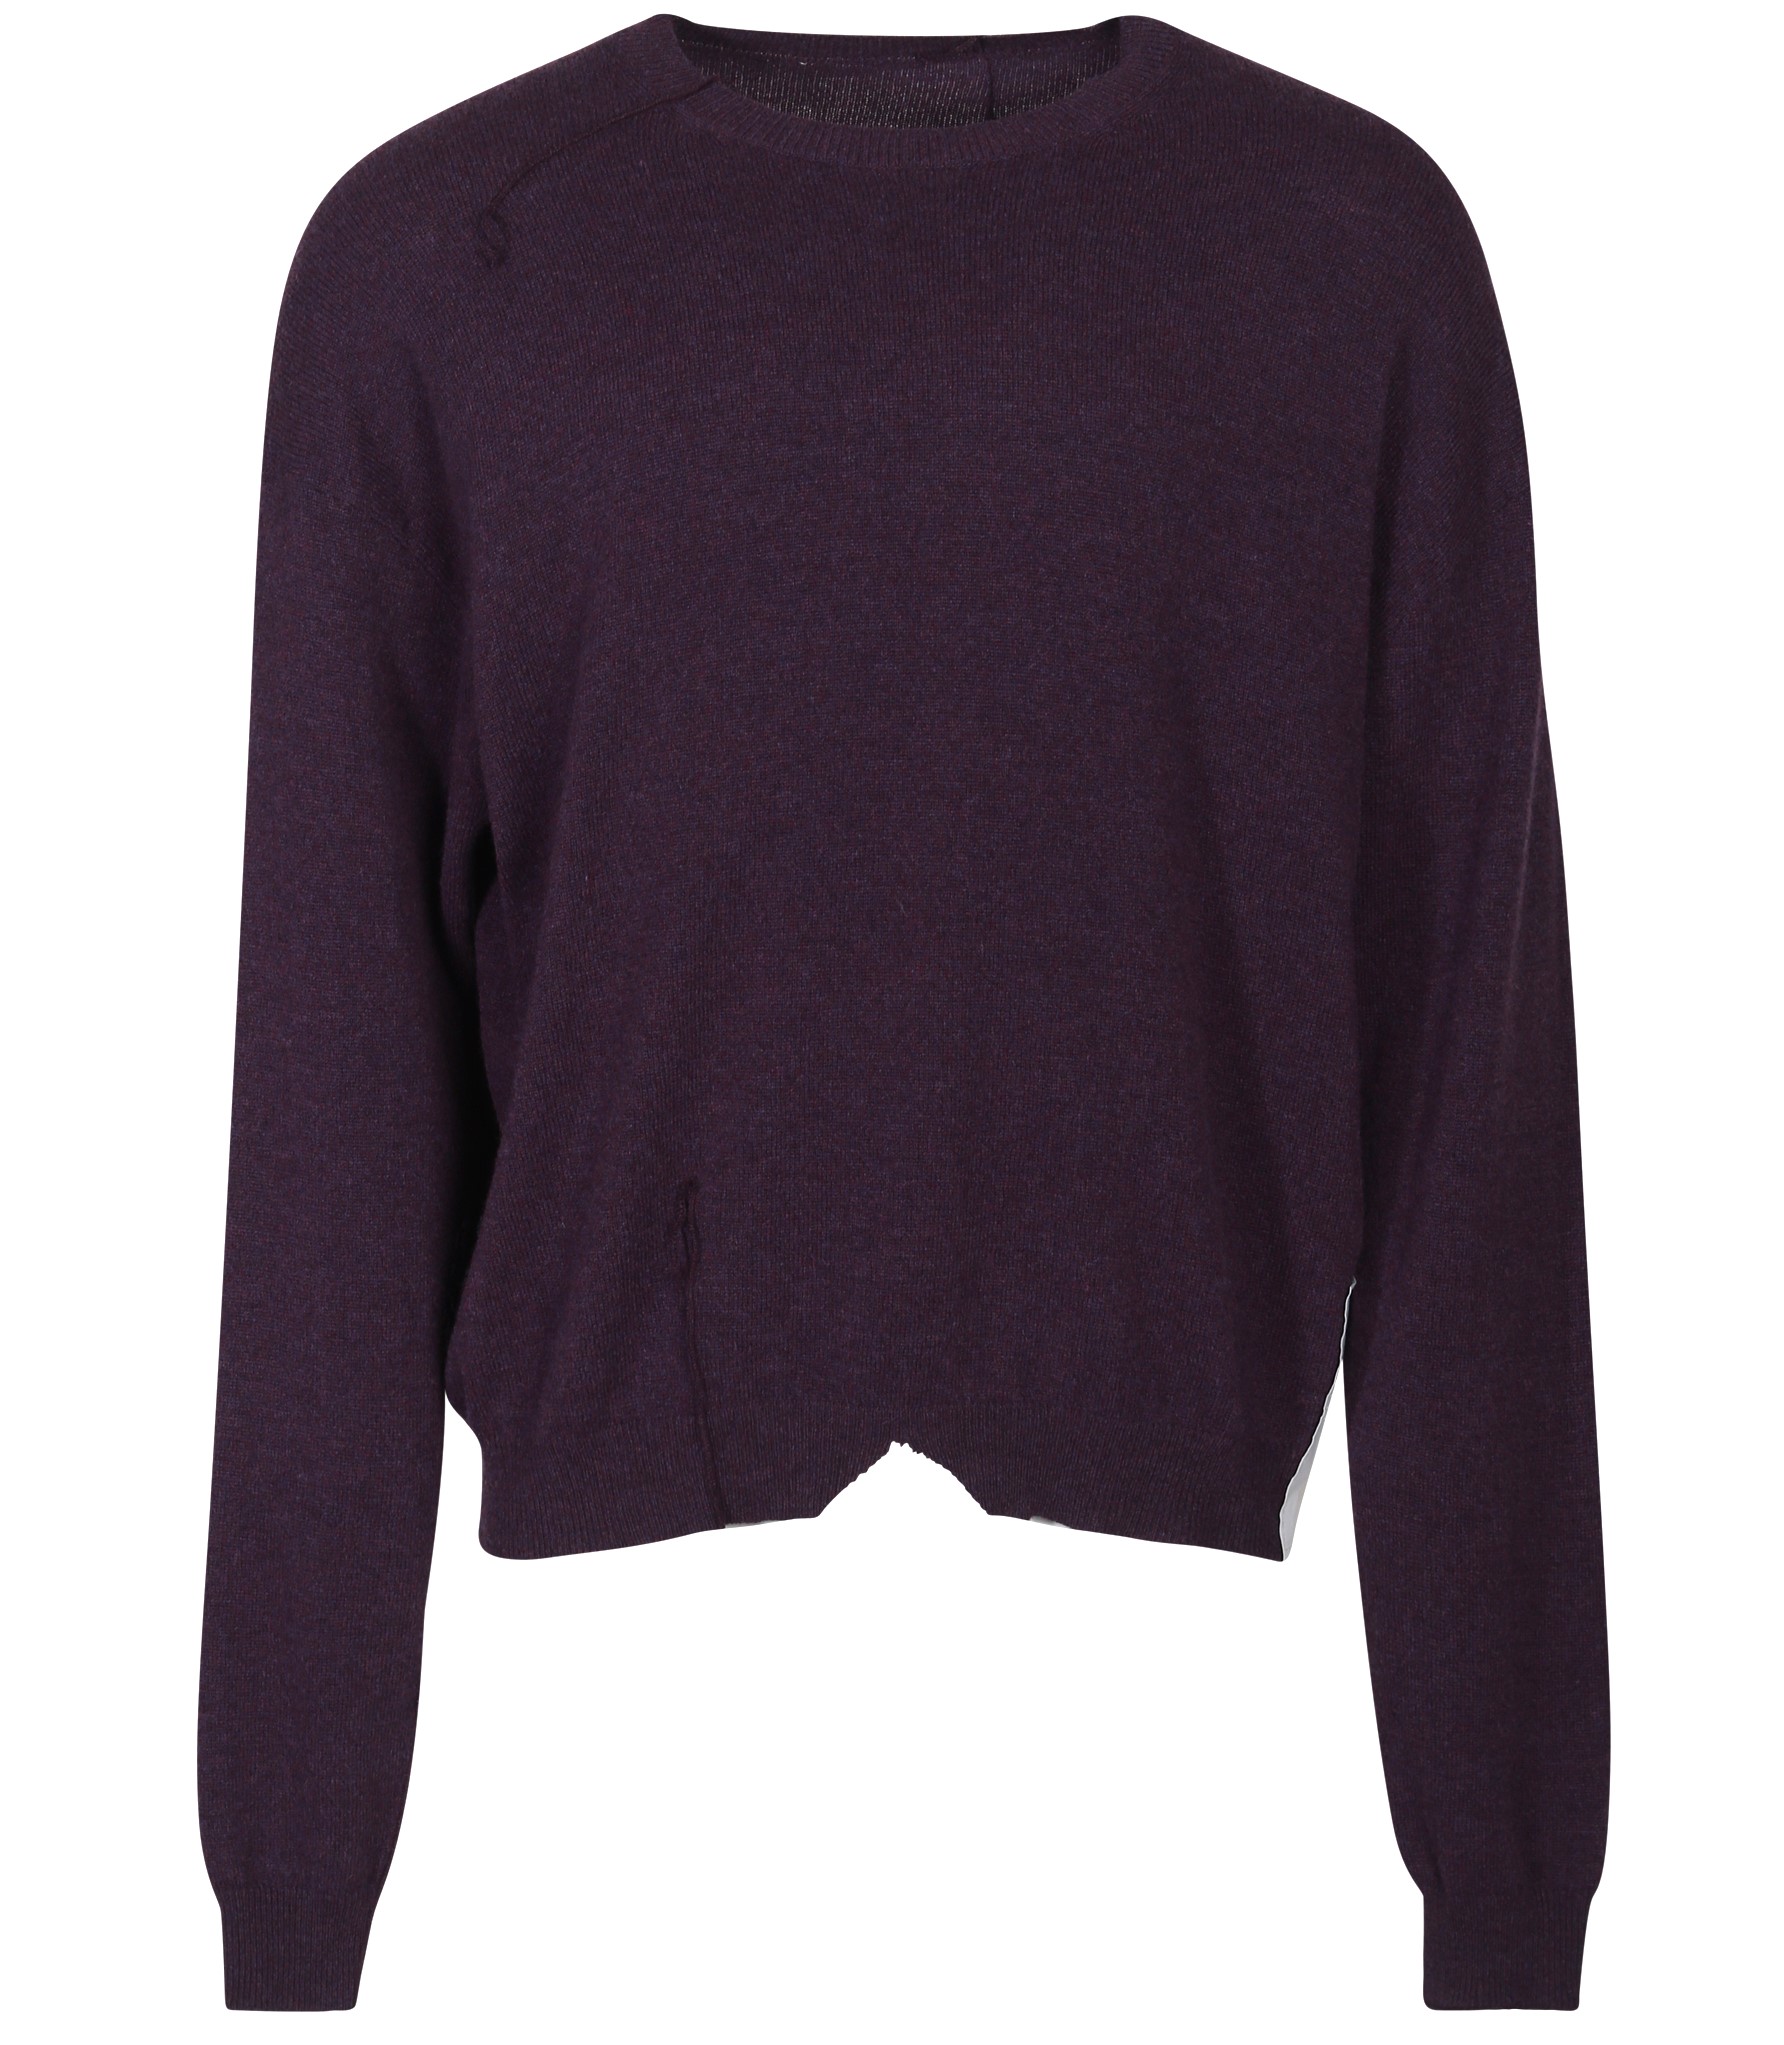 RAMAEL Infinity Cashmere Sweater in Aubergine S